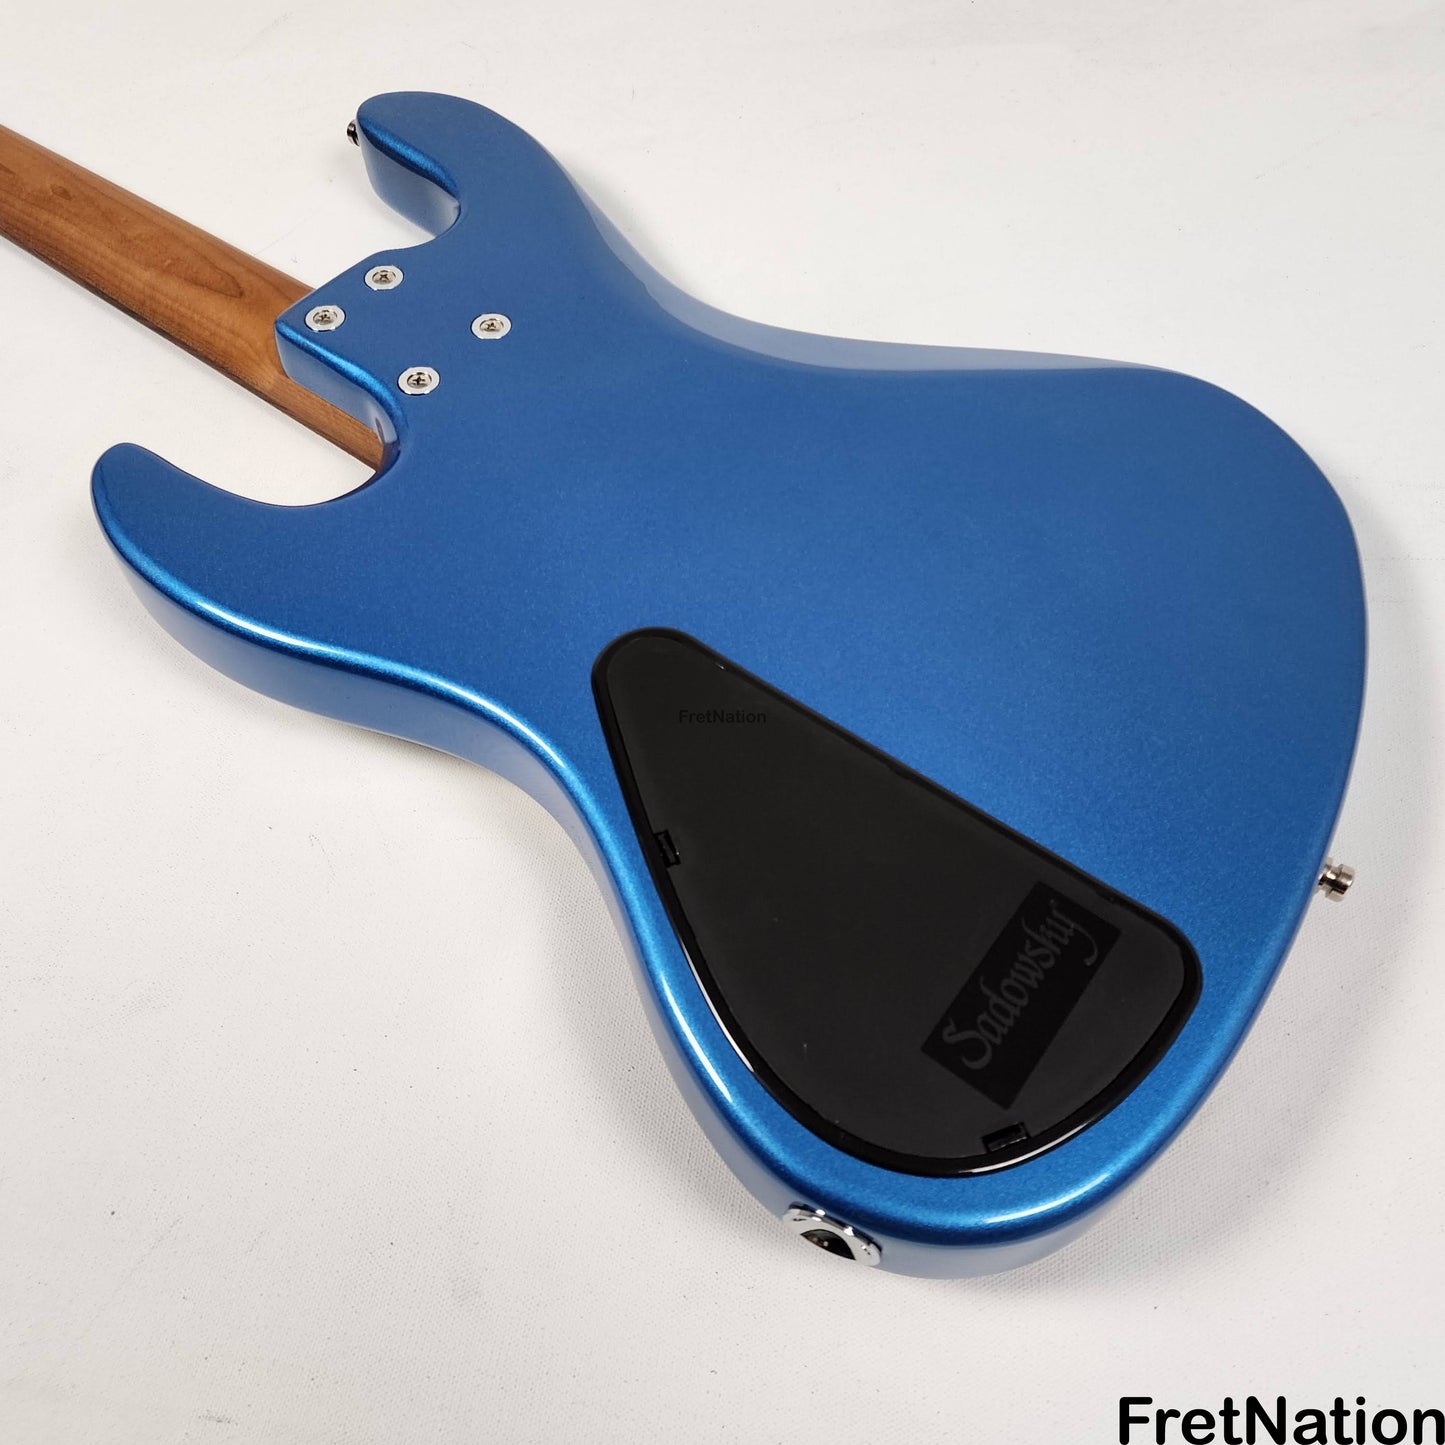 Sadowsky Sadowsky Super MetroExpress Hybrid PJ 4-String Bass - Ice Blue w/ Morado FB #1605-23 9.38lbs